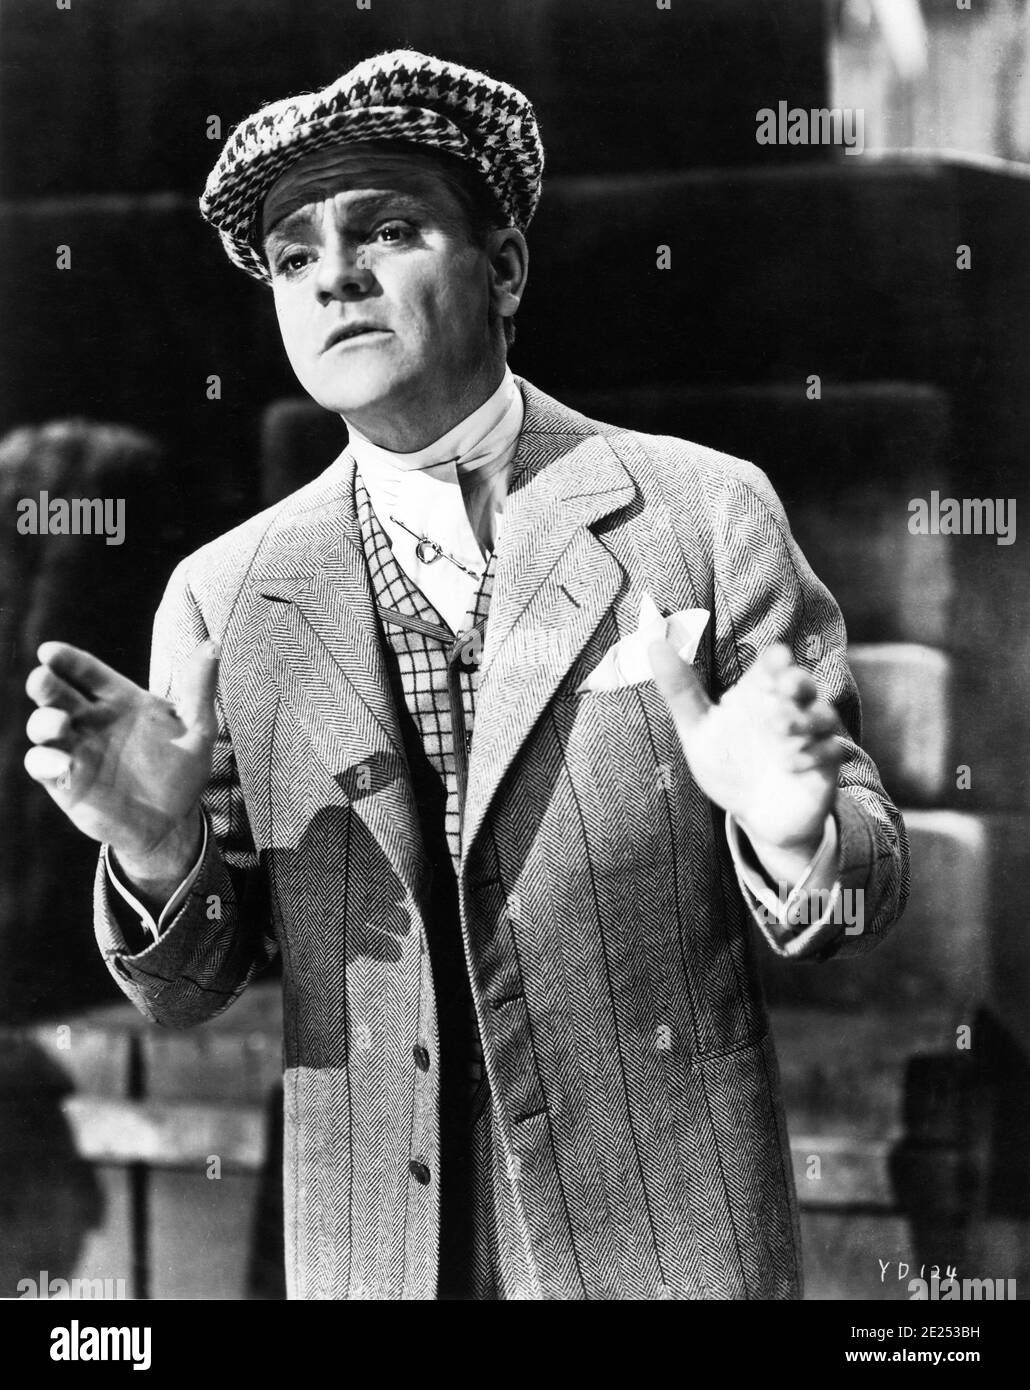 JAMES CAGNEY als George M. Cohan mit Give My Regards to Broadway in YANKEE DOODLE DANDY 1942 Regisseur MICHAEL CURTIZ Warner Bros. Stockfoto